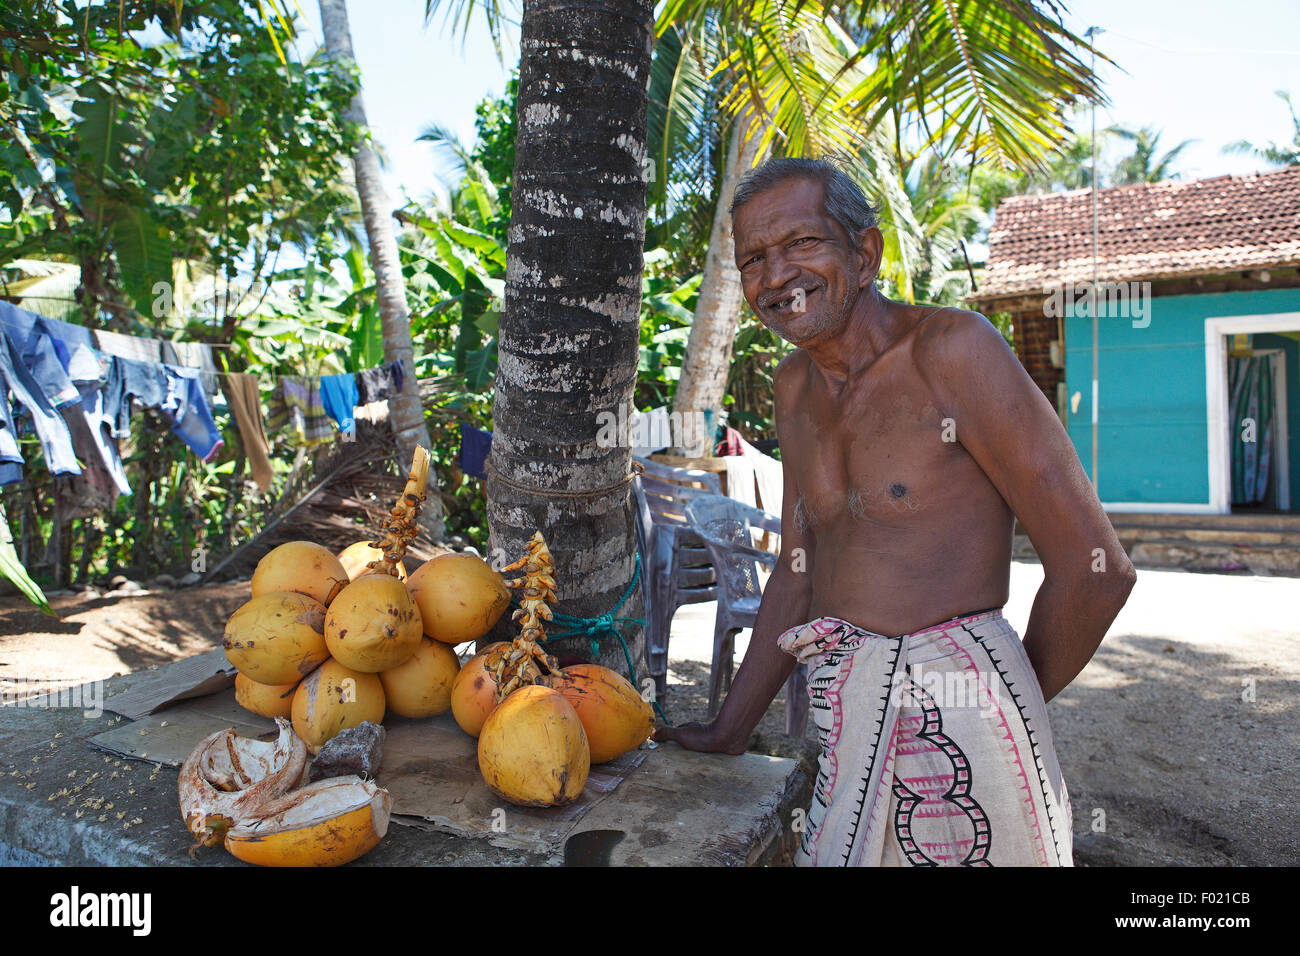 Man, 60 years old, cutting open coconuts, Dondra, Southern Province, Indian Ocean, Ceylon, Sri Lanka Stock Photo